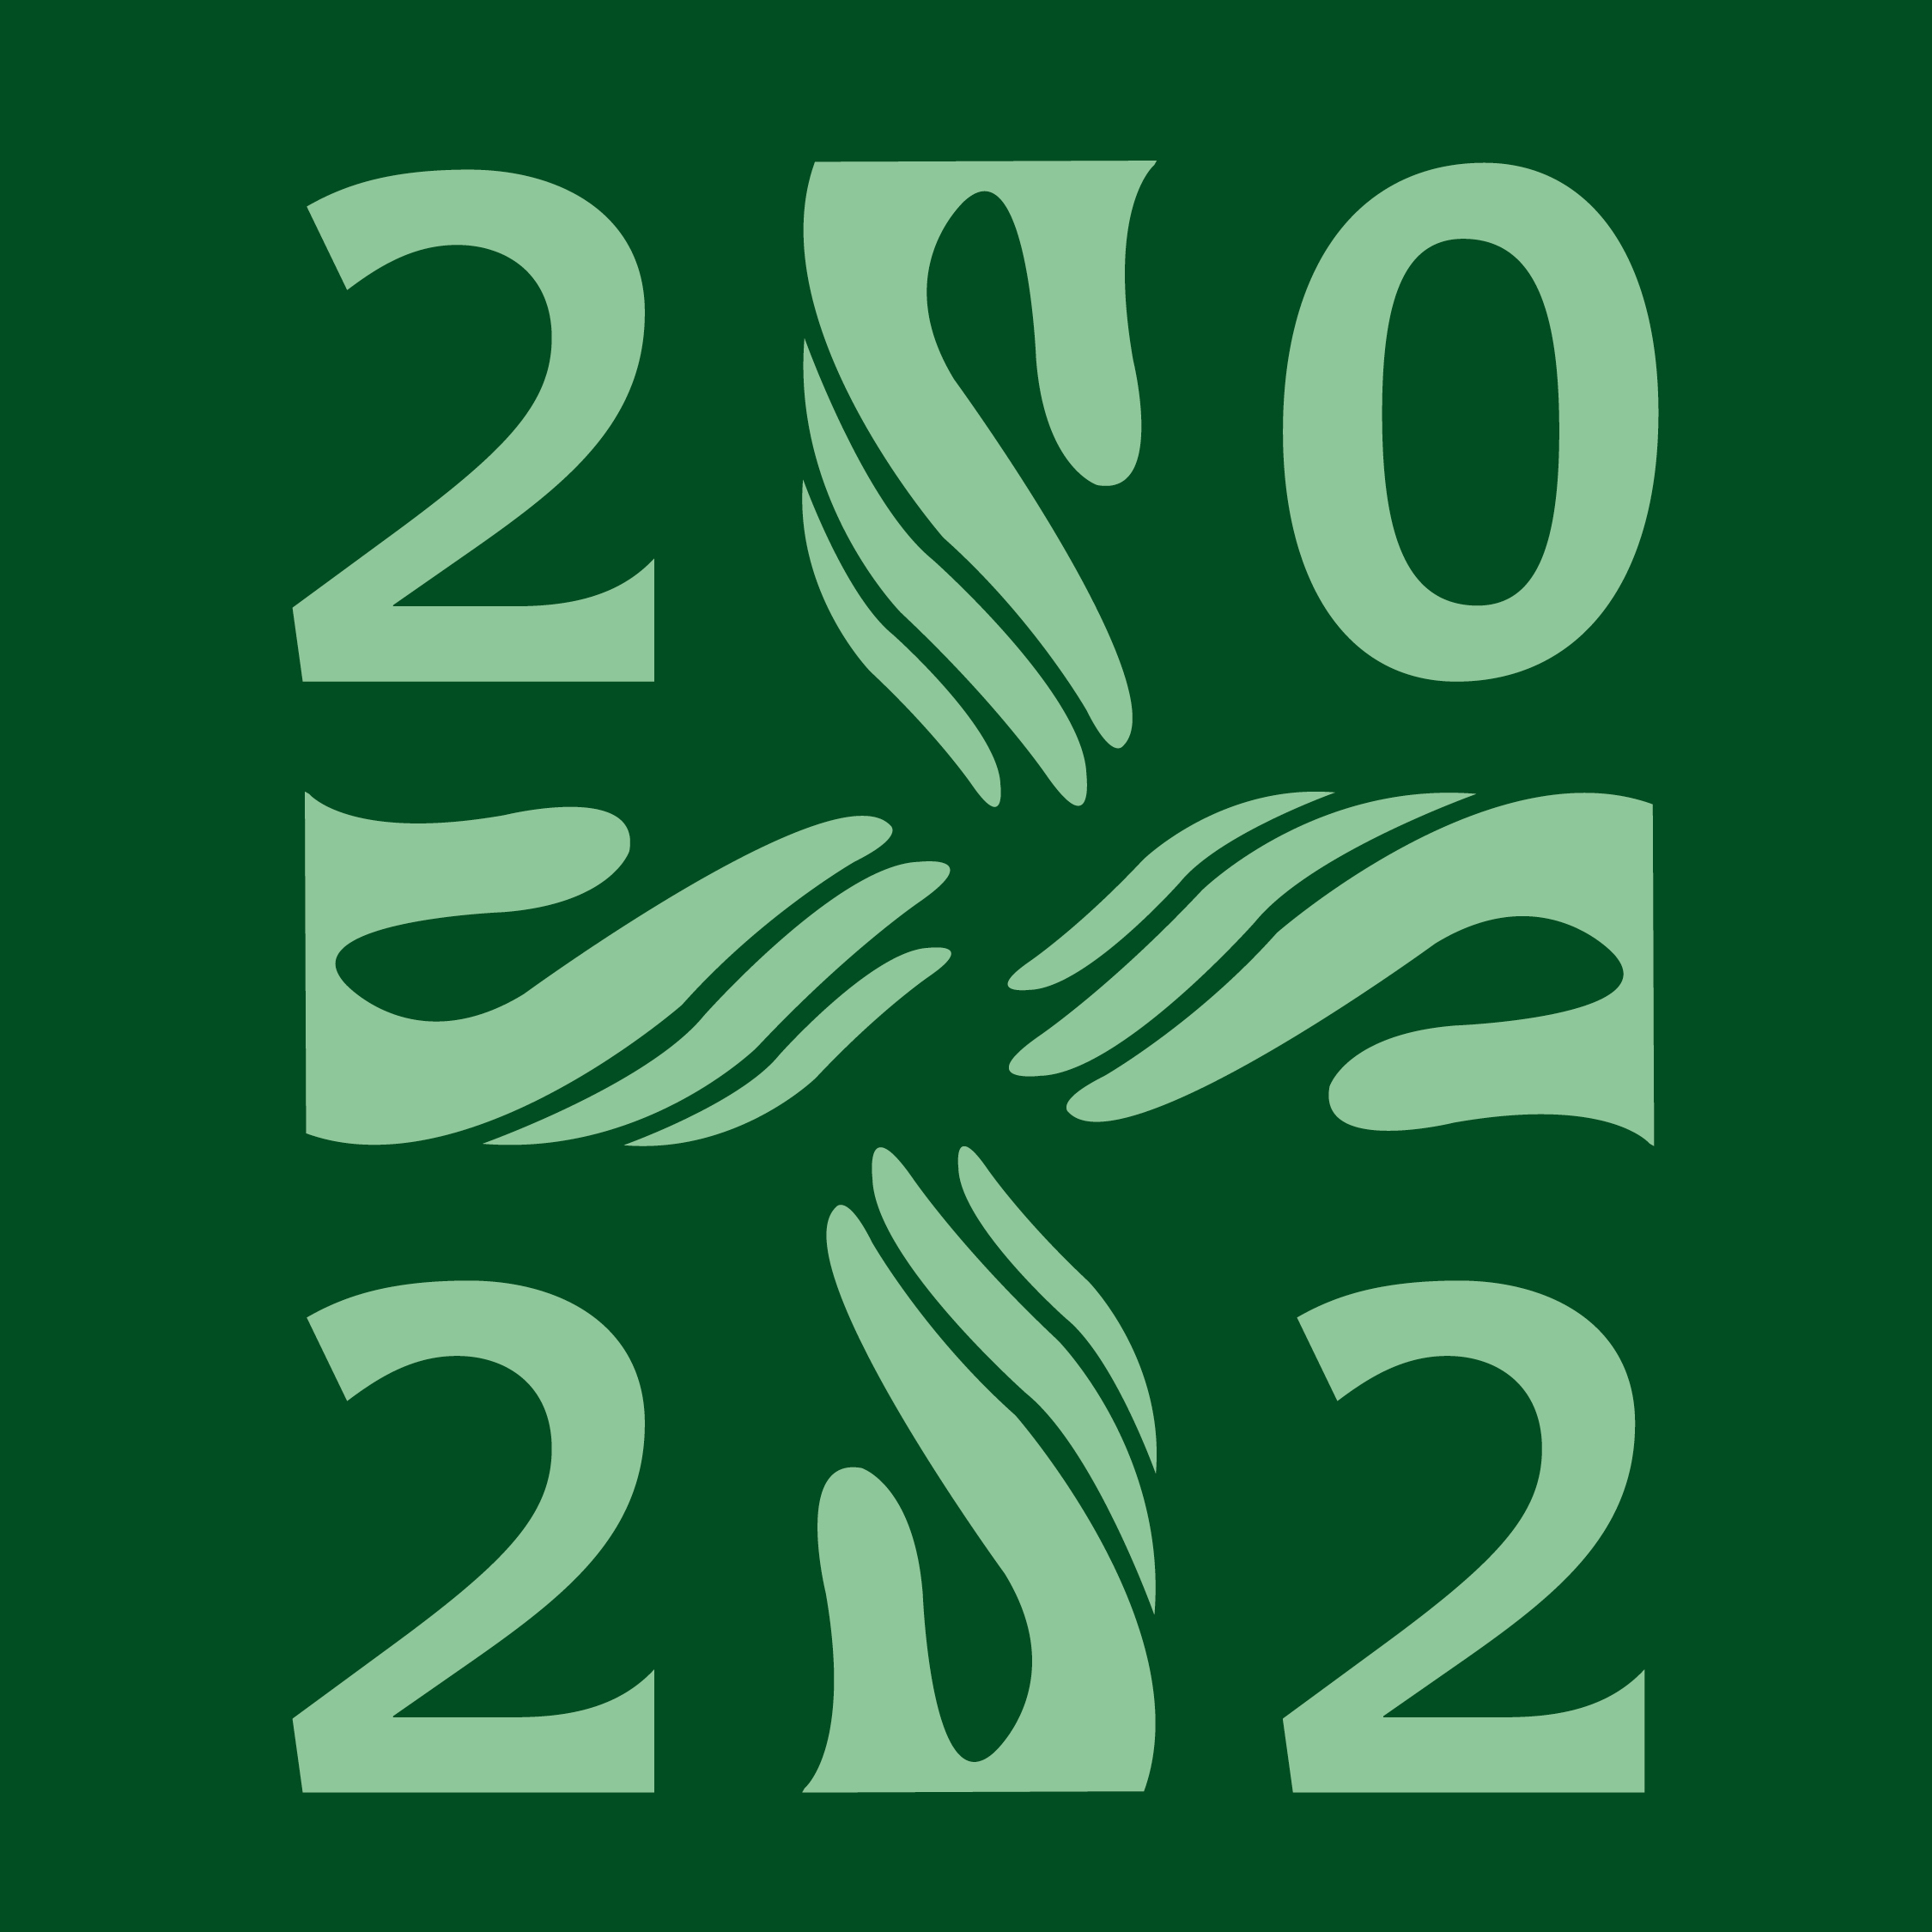 Diakonian juhlavuoden logo.